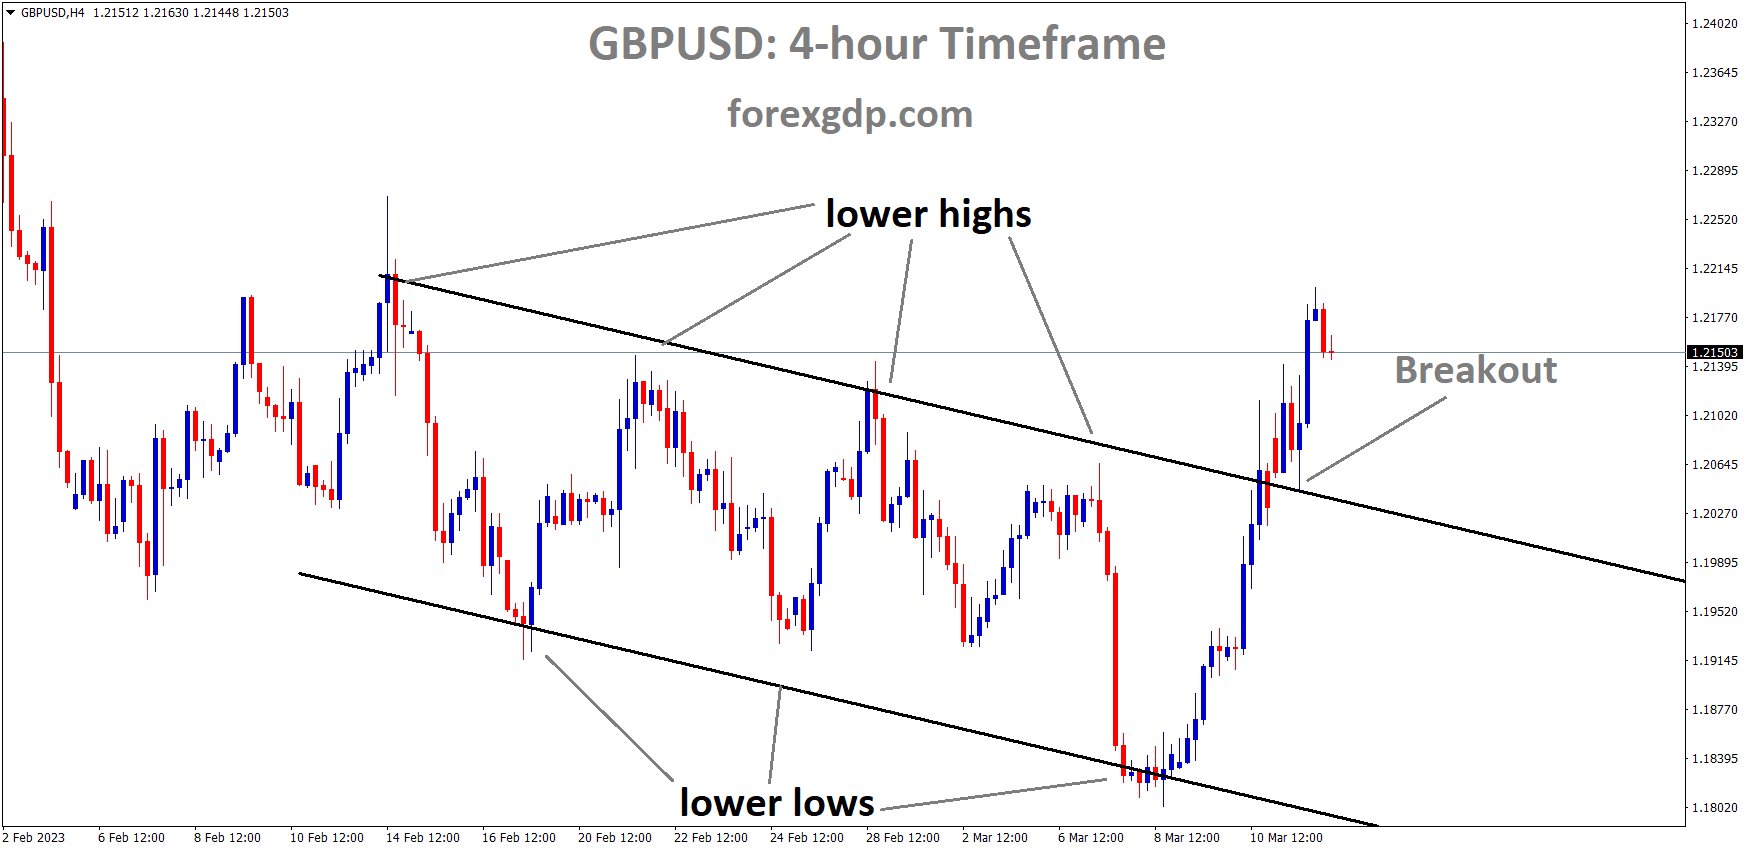 GBPUSD H4 TF analysis Market has broken the Descending channel in Upside.